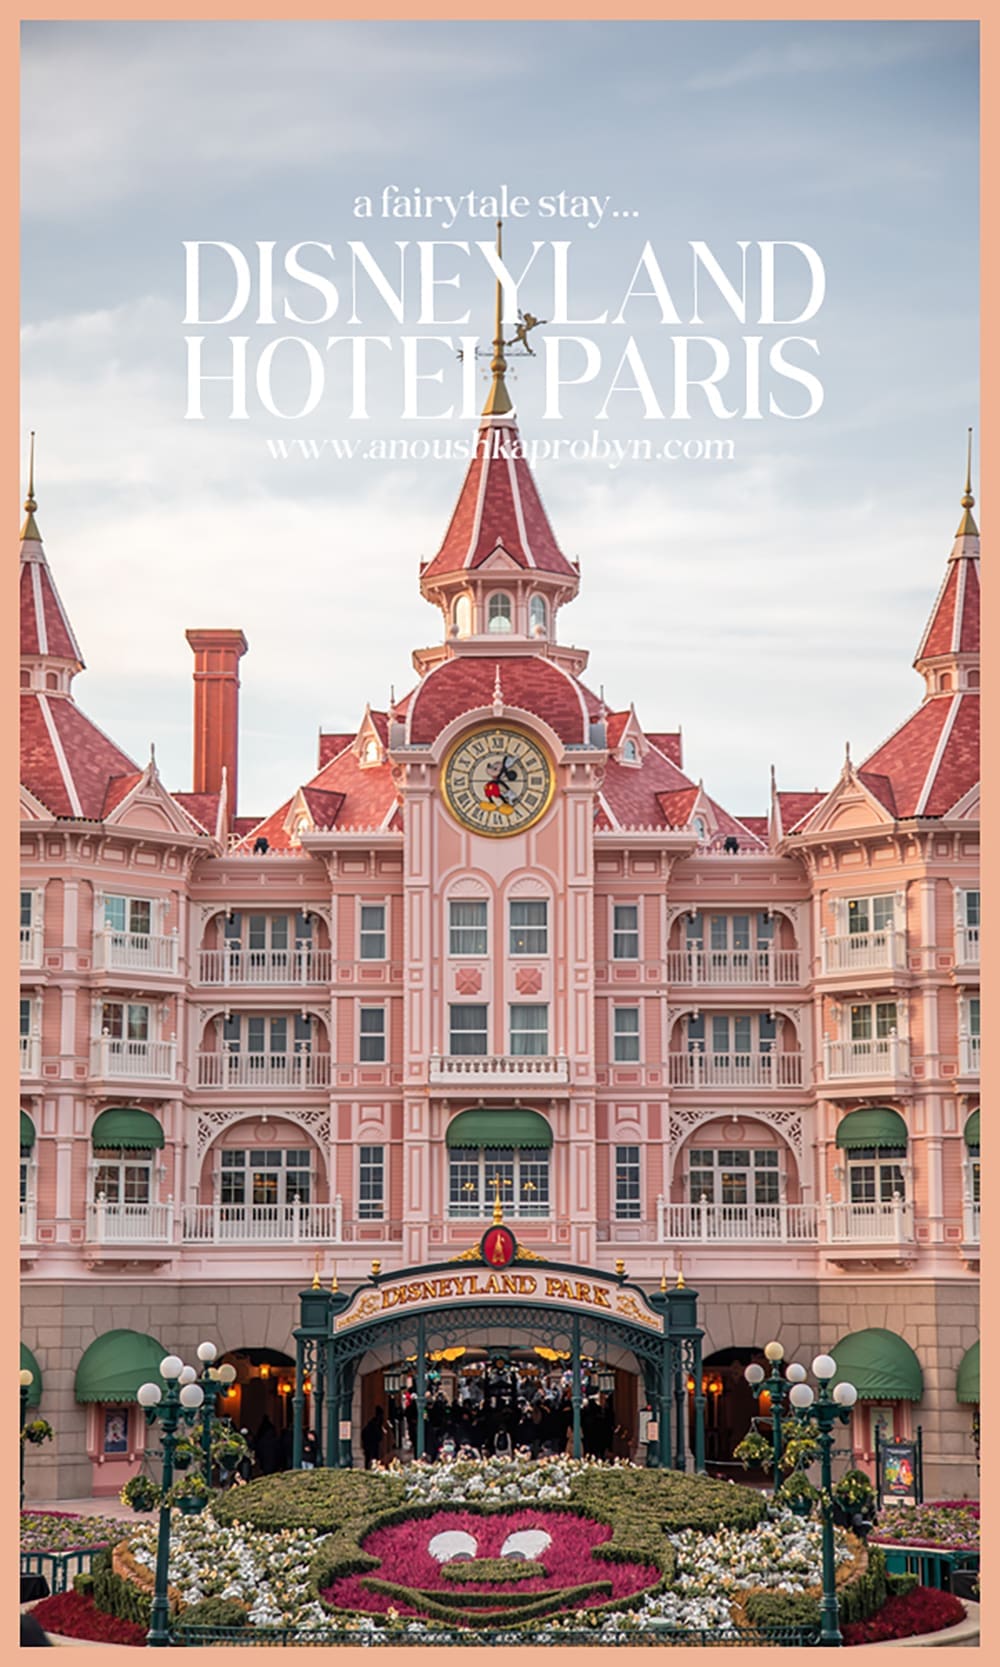 Disneyland Hotel Paris Review2